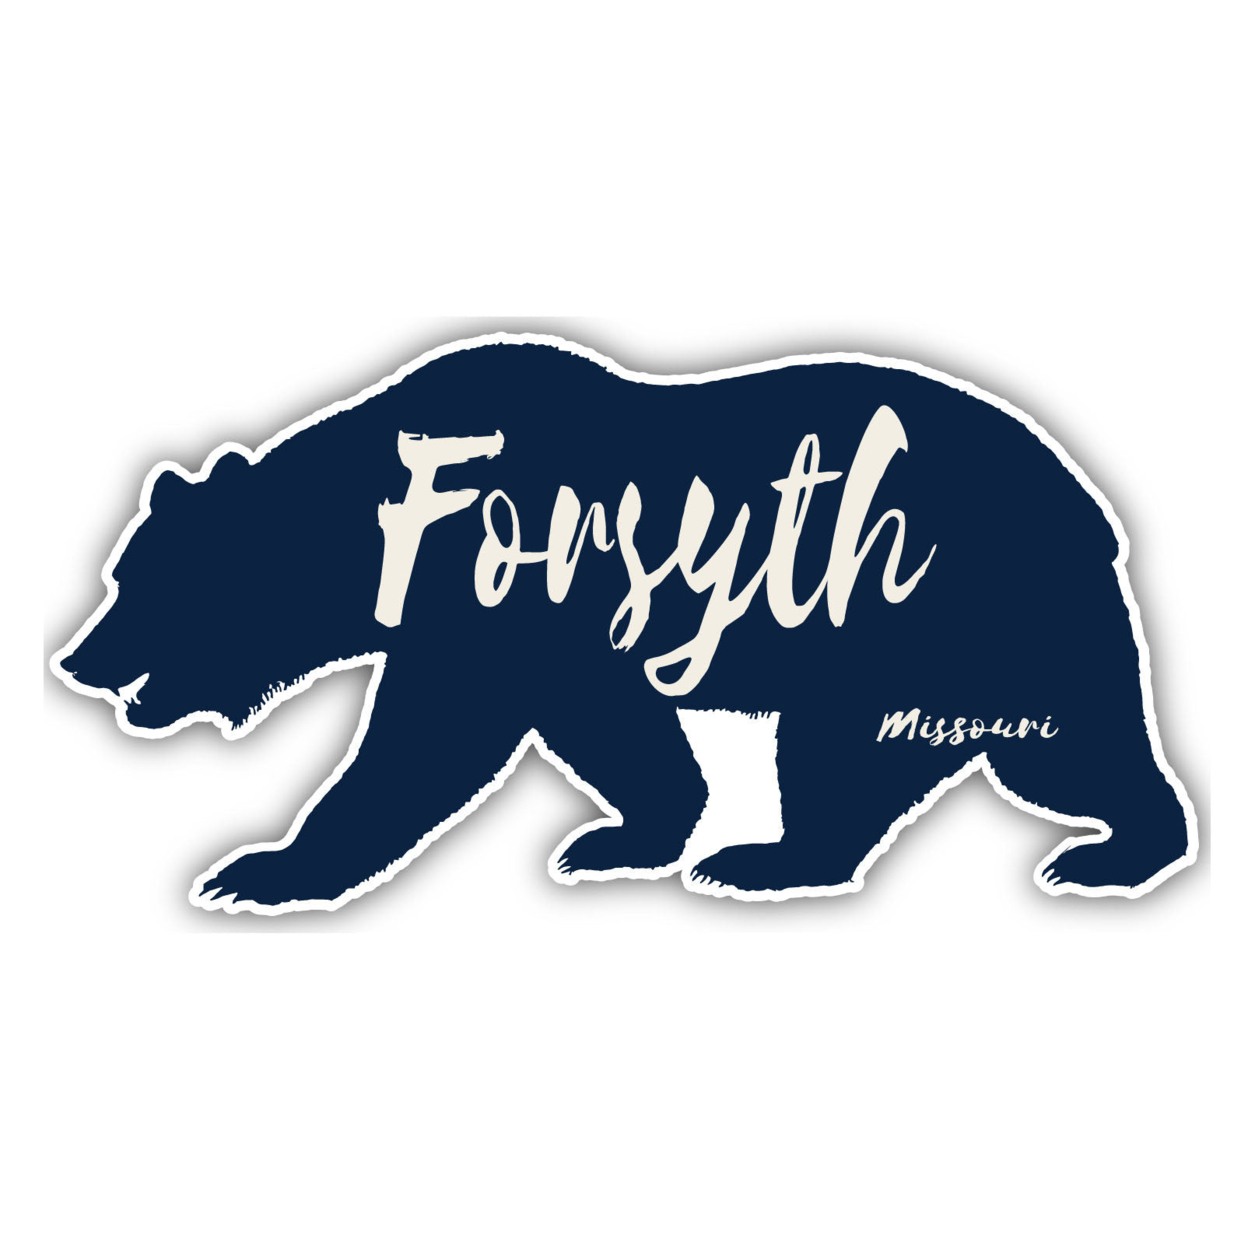 Forsyth Missouri Souvenir Decorative Stickers (Choose Theme And Size) - 4-Pack, 4-Inch, Bear